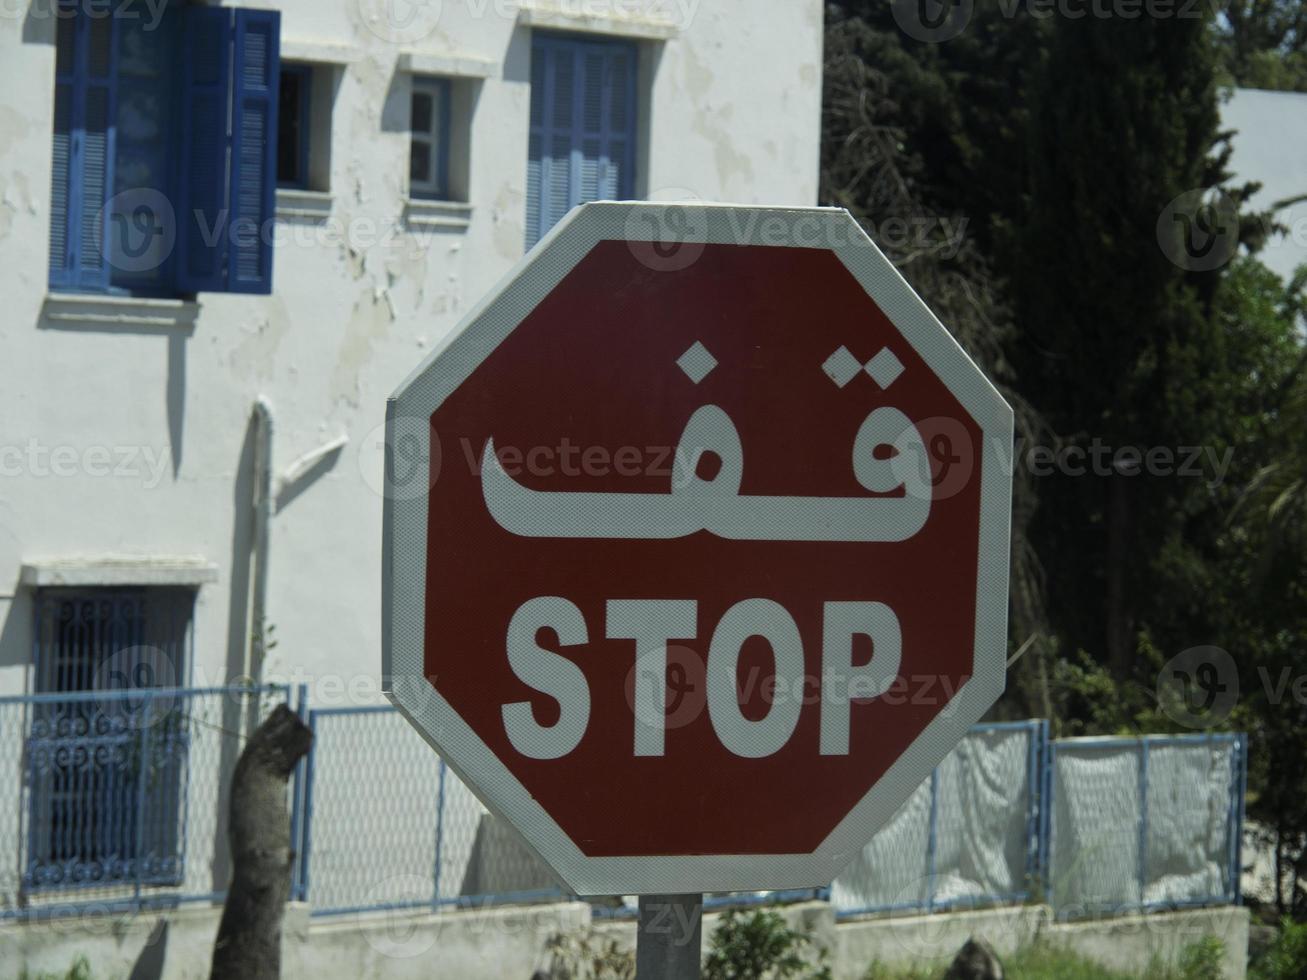 the city of tunis in tunisia photo